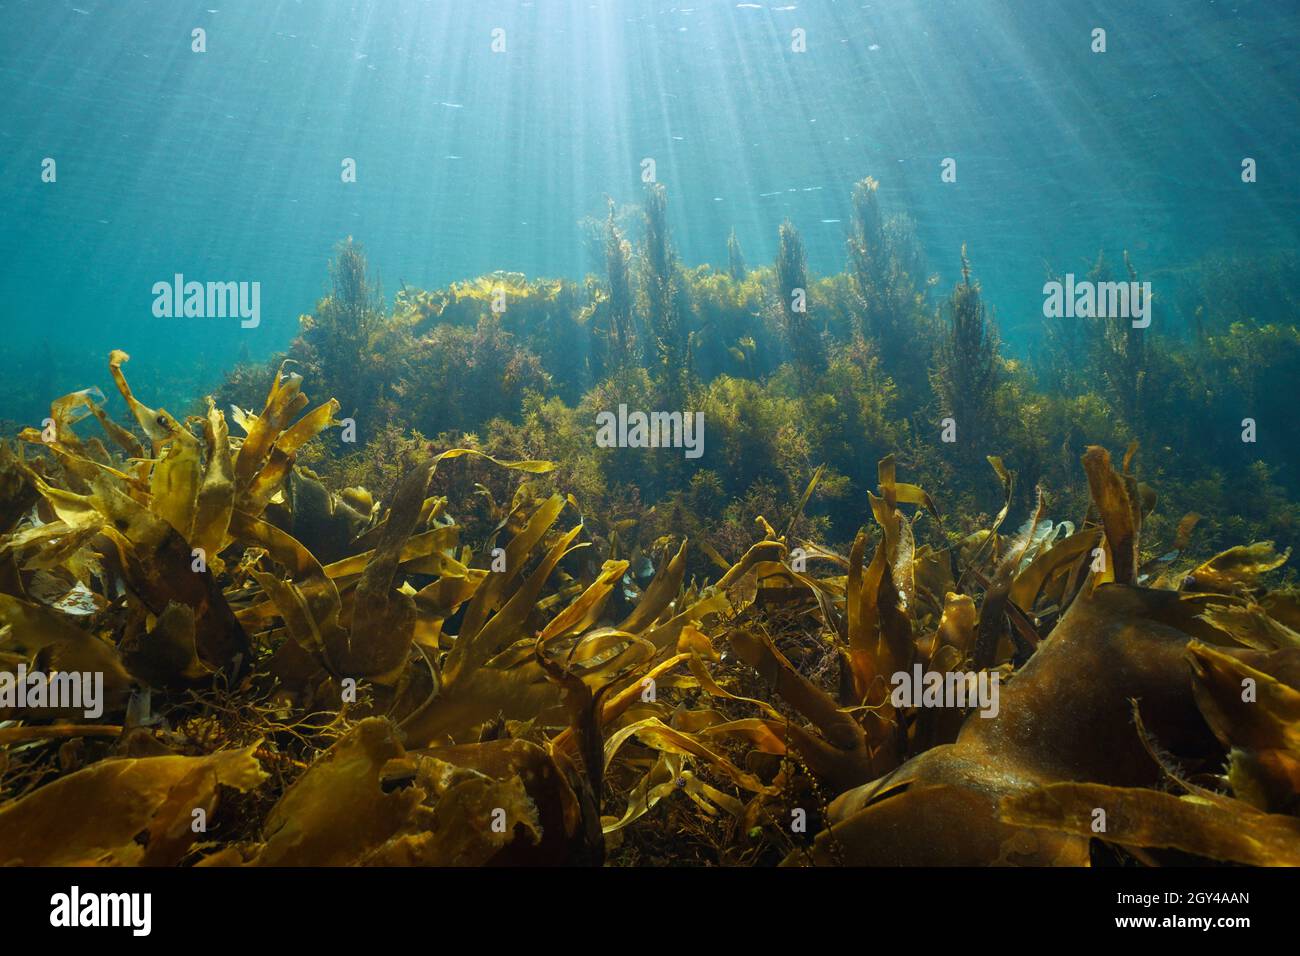 Algae on the ocean floor and natural sunlight underwater seascape in the ocean, Eastern Atlantic, Spain, Galicia Stock Photo